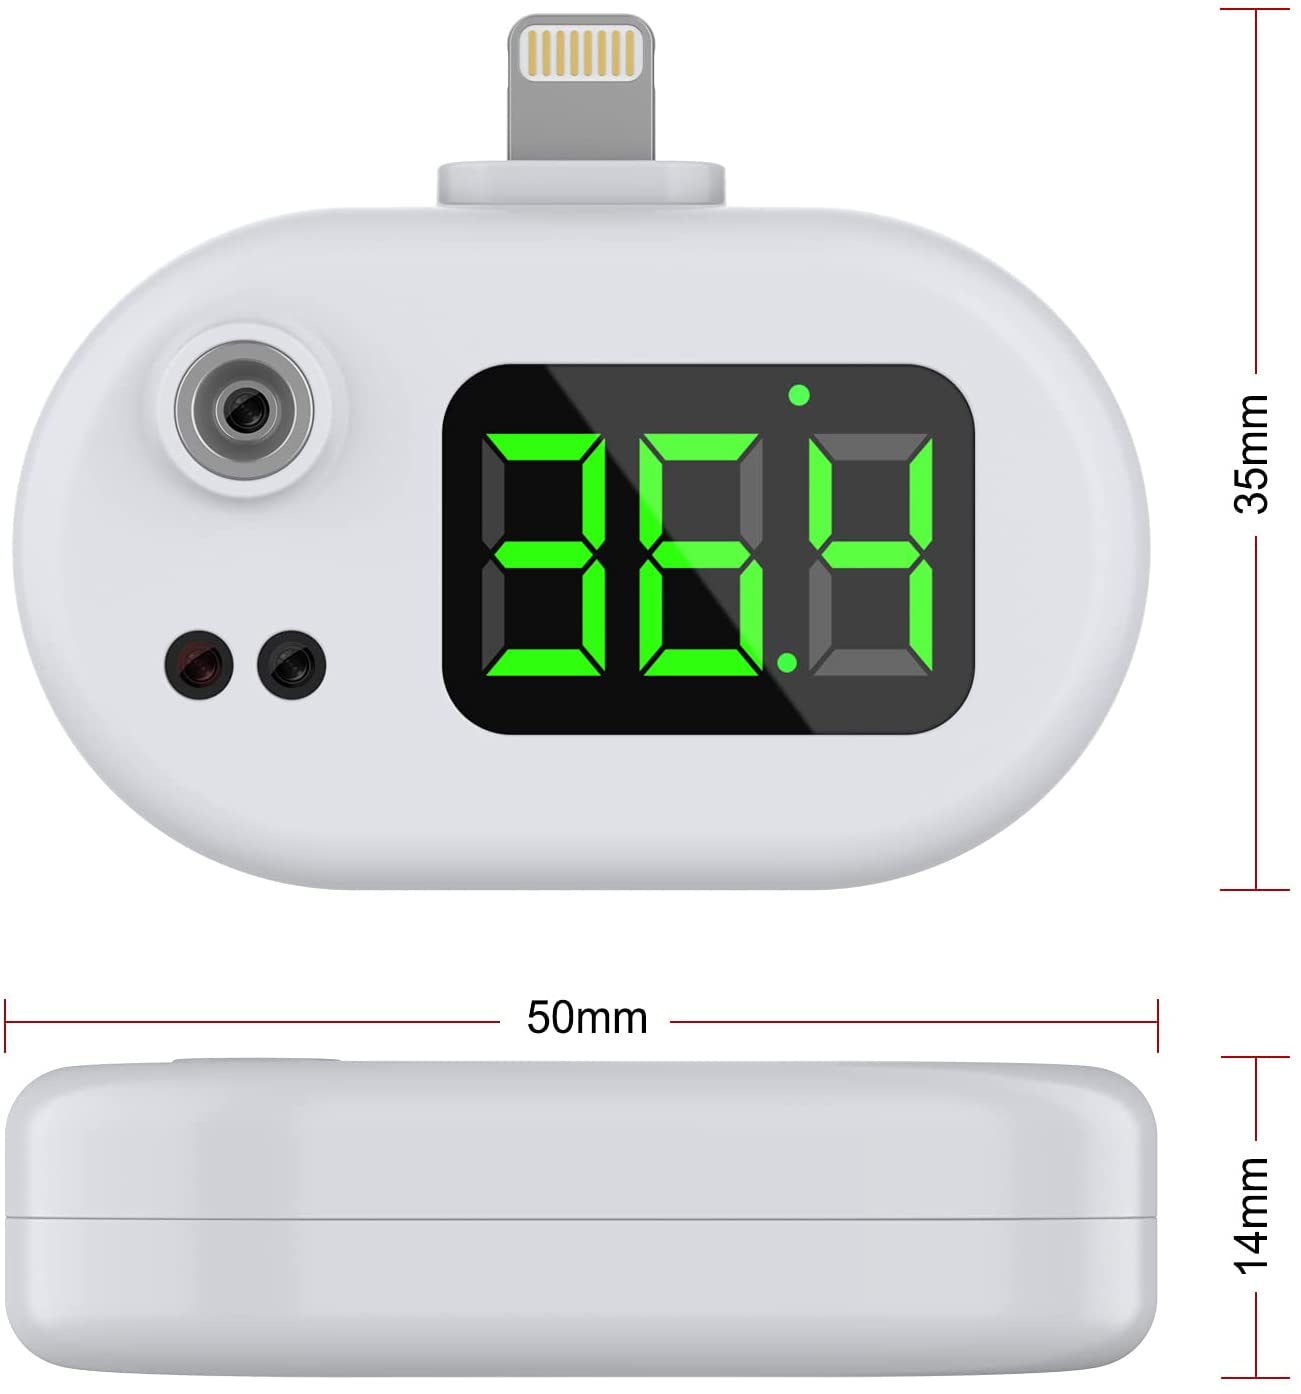 Punkcase Mini Portable USB Infrared Thermometer for iOS - White